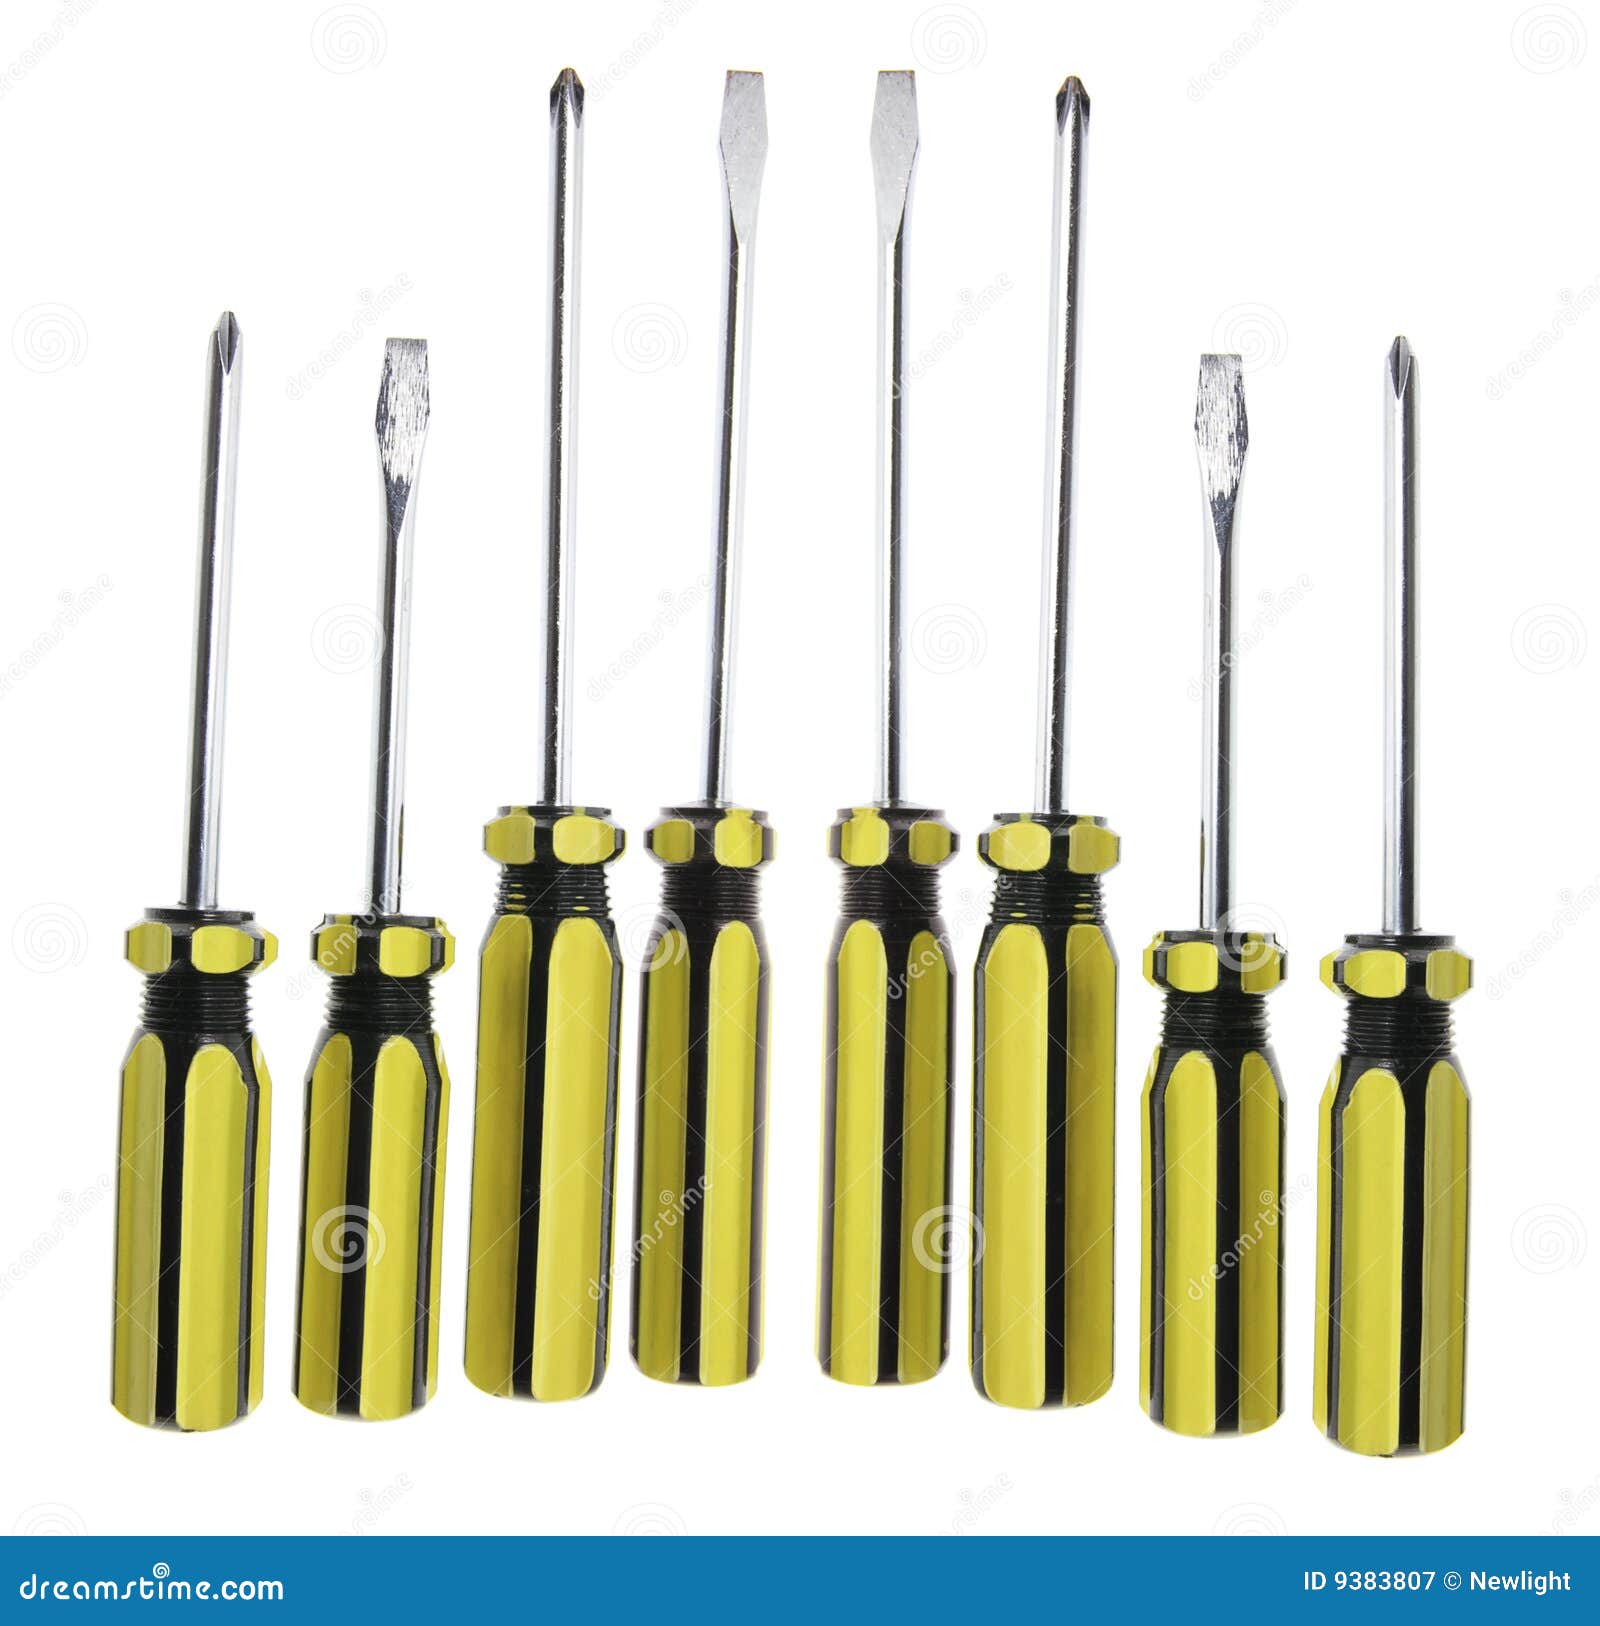 row of screwdrivers